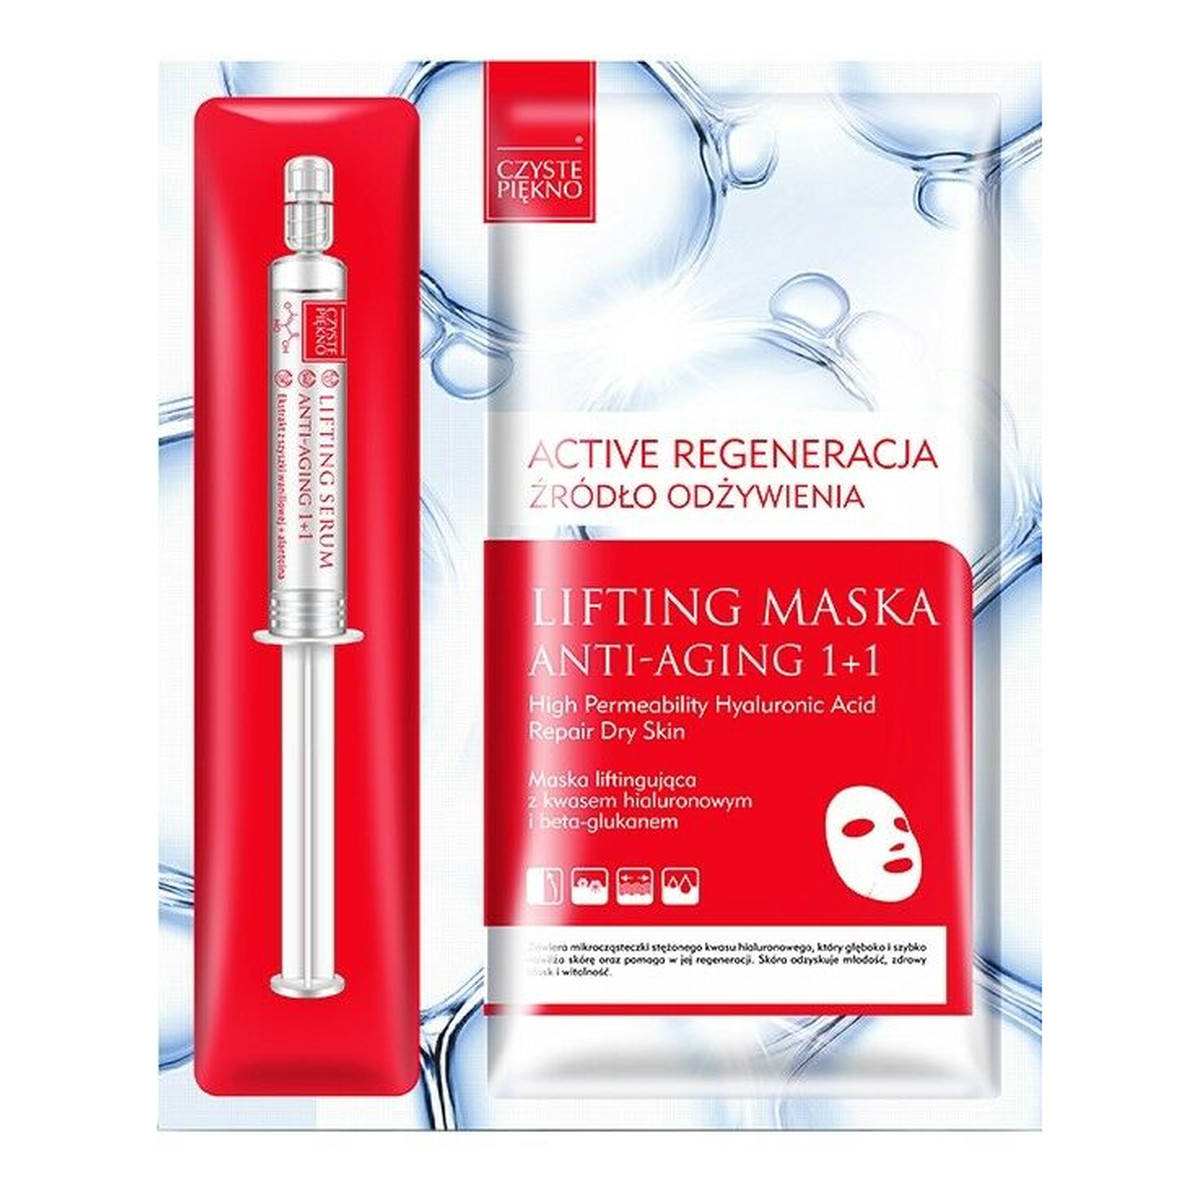 Estetica Czyste Piękno LIFTING maska ANTI-AGING + serum, 30 g + kwas hialuronowy 5ml